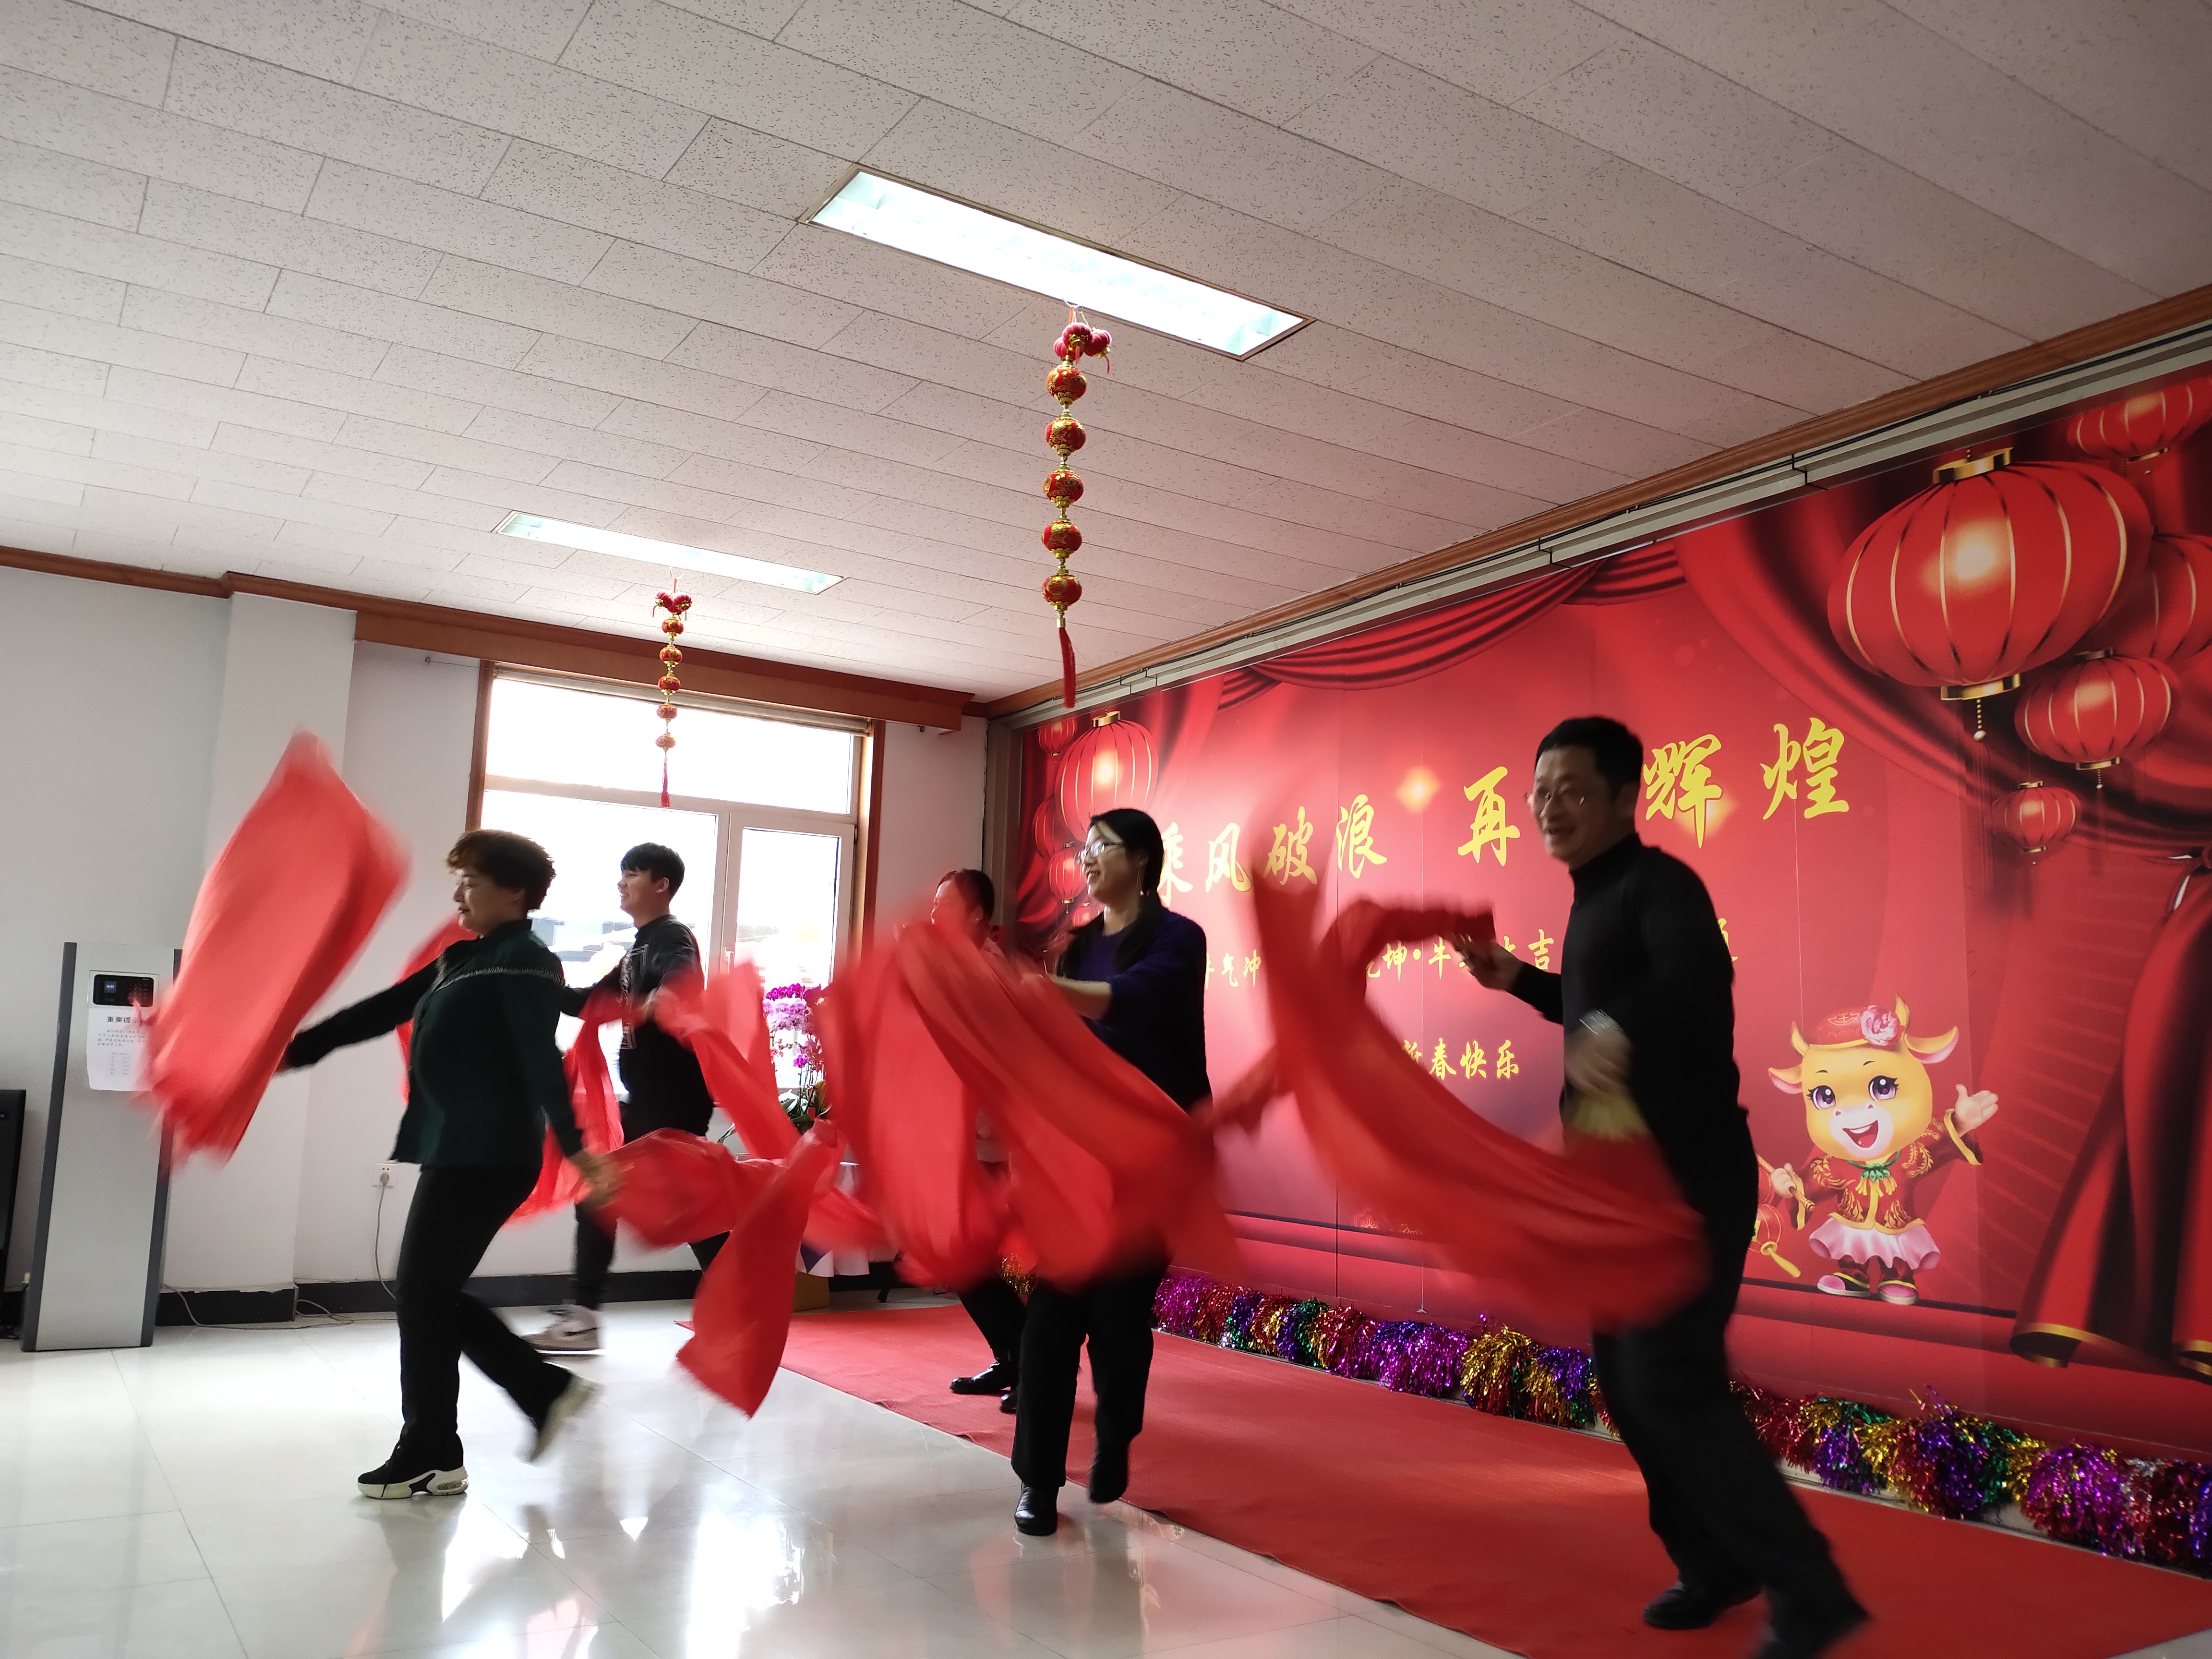 We celebrate Chinese New Year